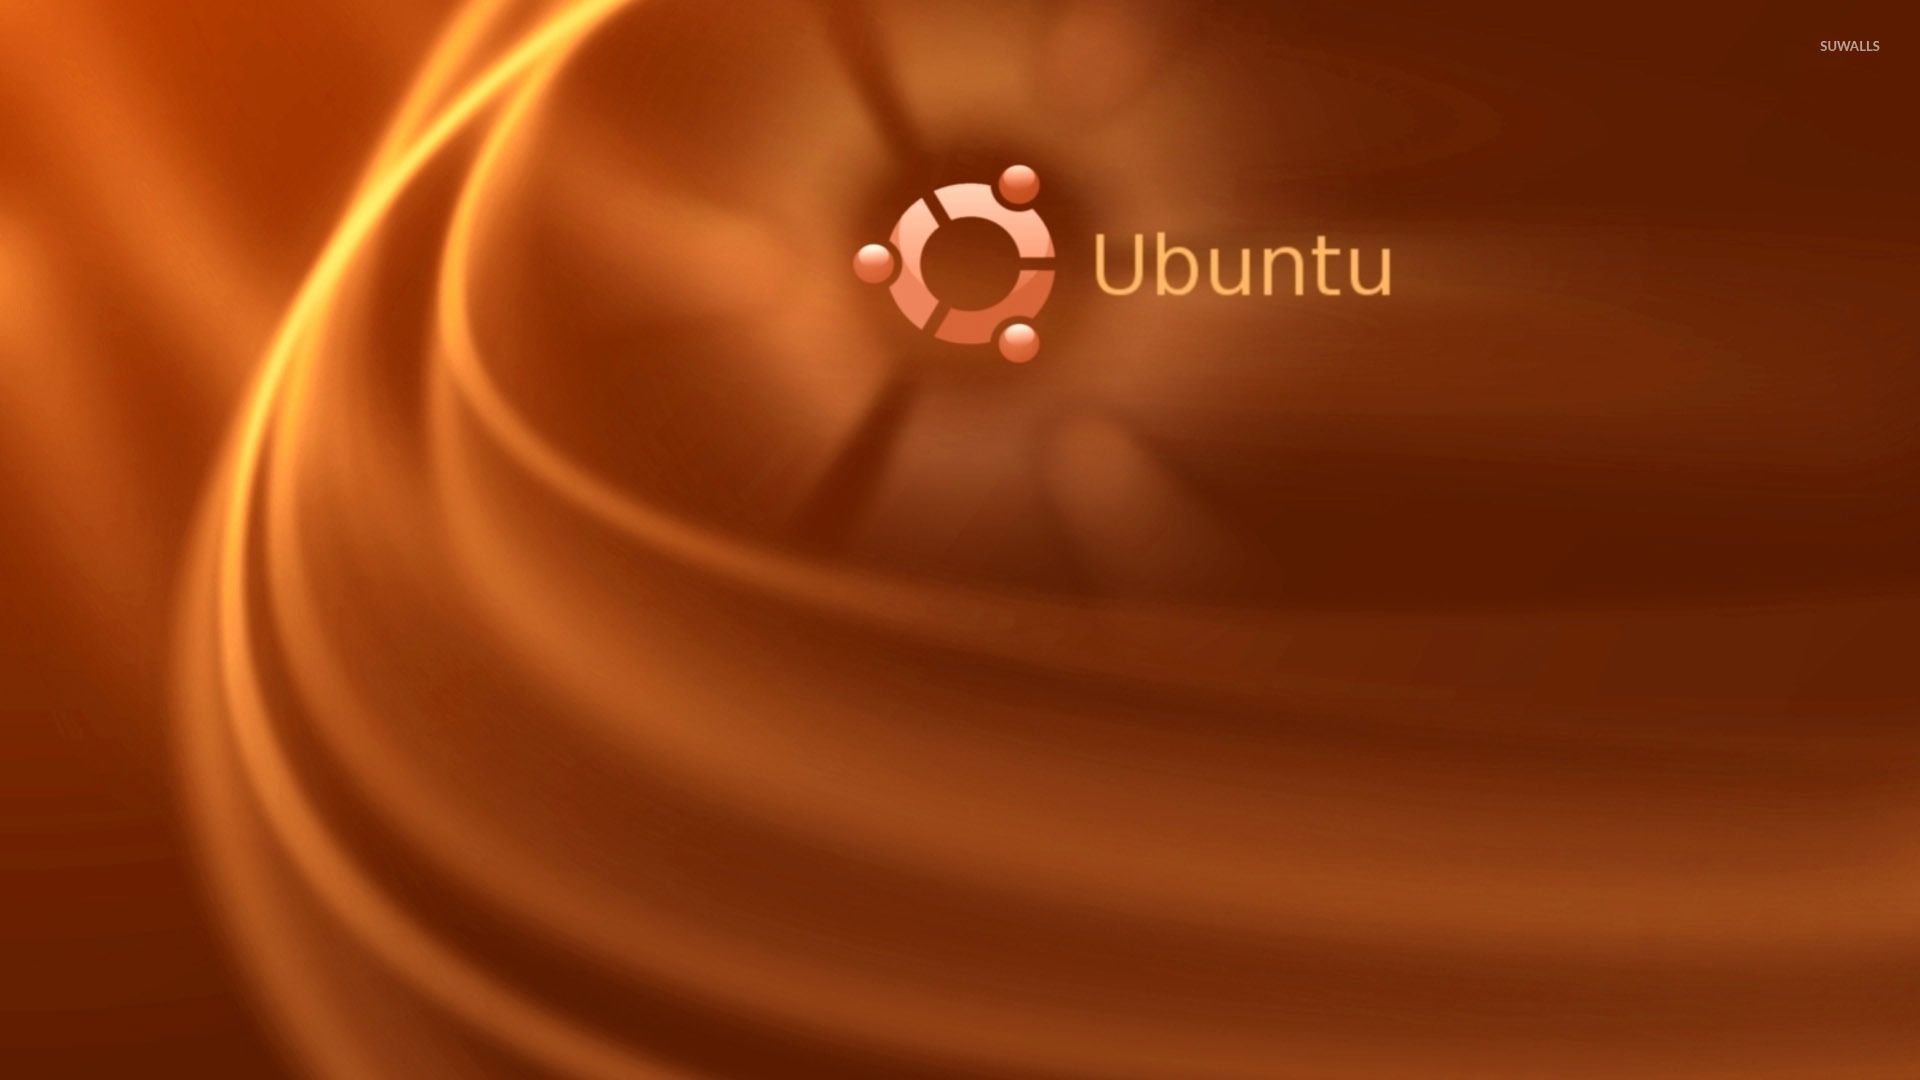 How to install Postman in Ubuntu?